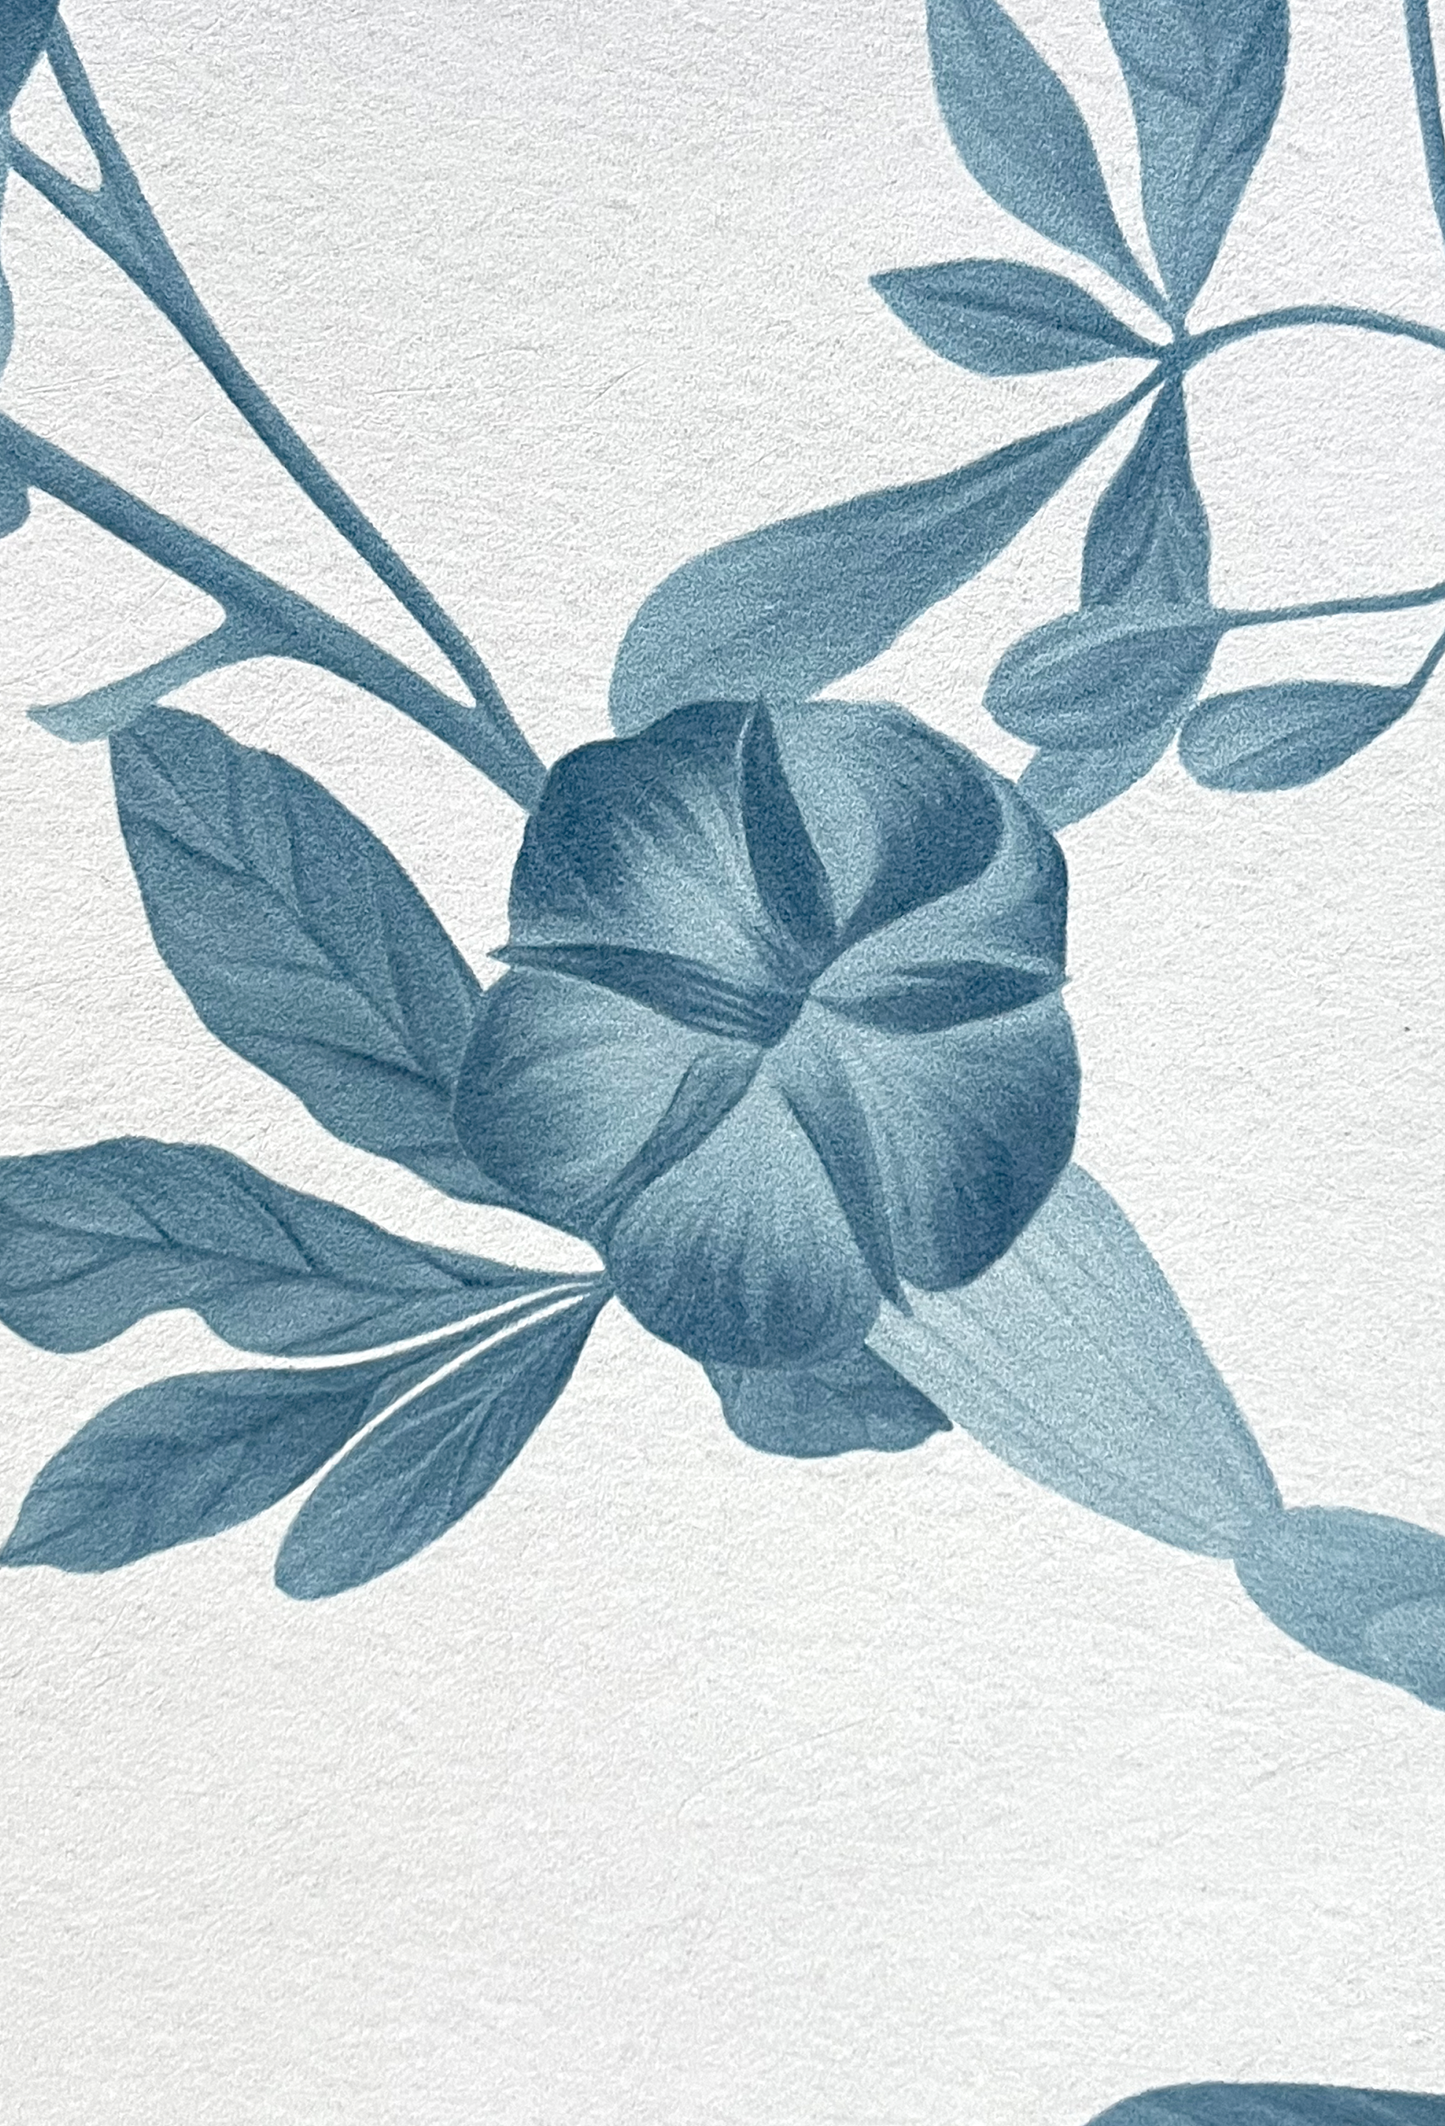 Close up of a blue flower designed by Deus ex Gardenia featuring the Midsummer Luxury wallpaper in Iris.